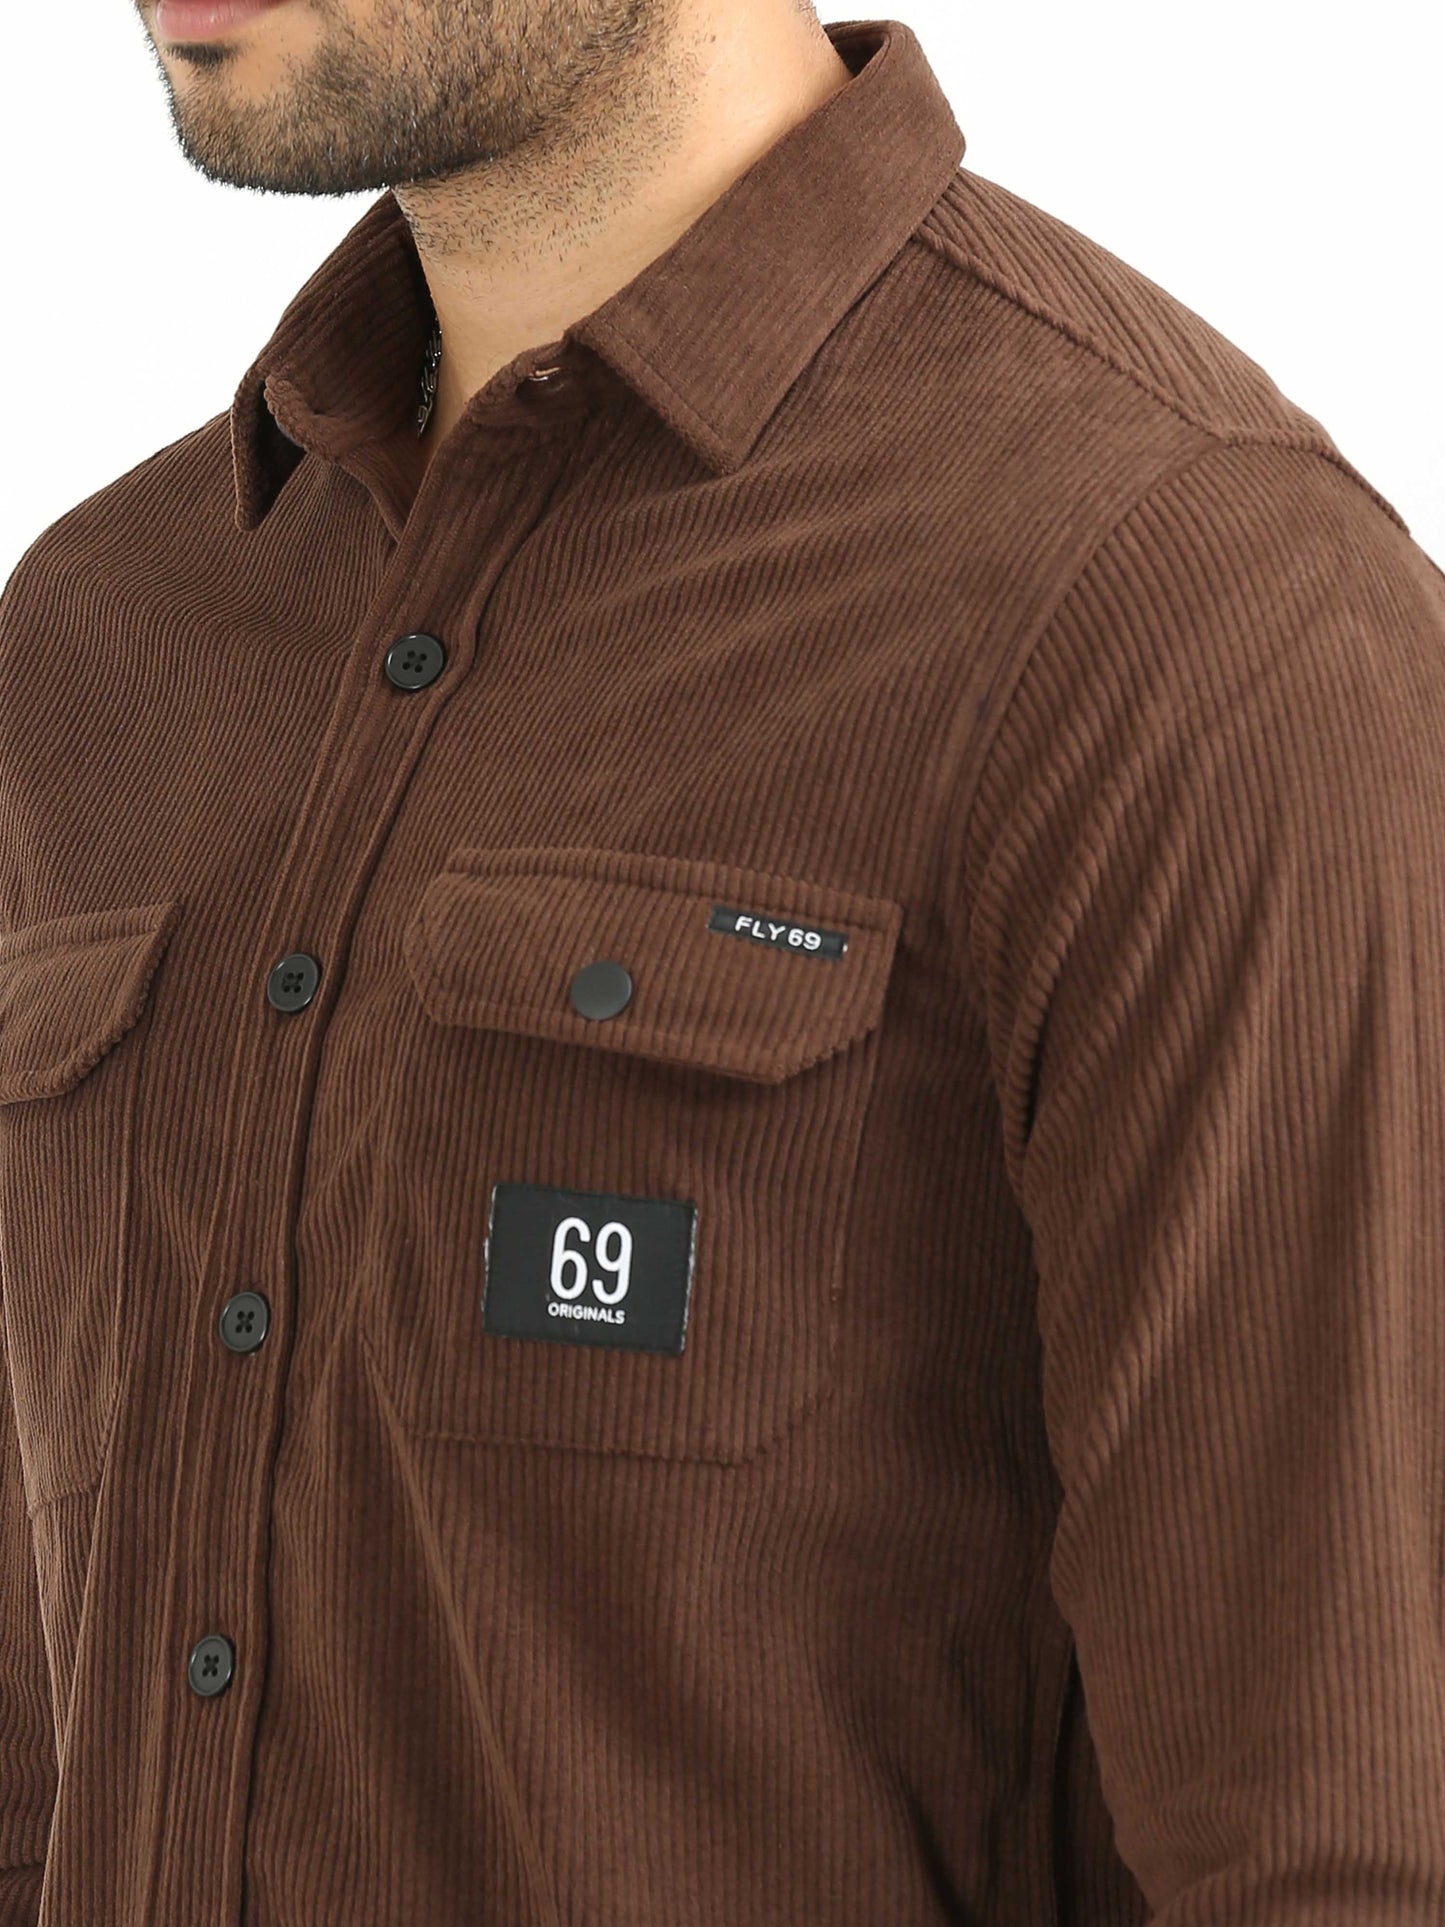 Walnut Brown Corduroy Shirt